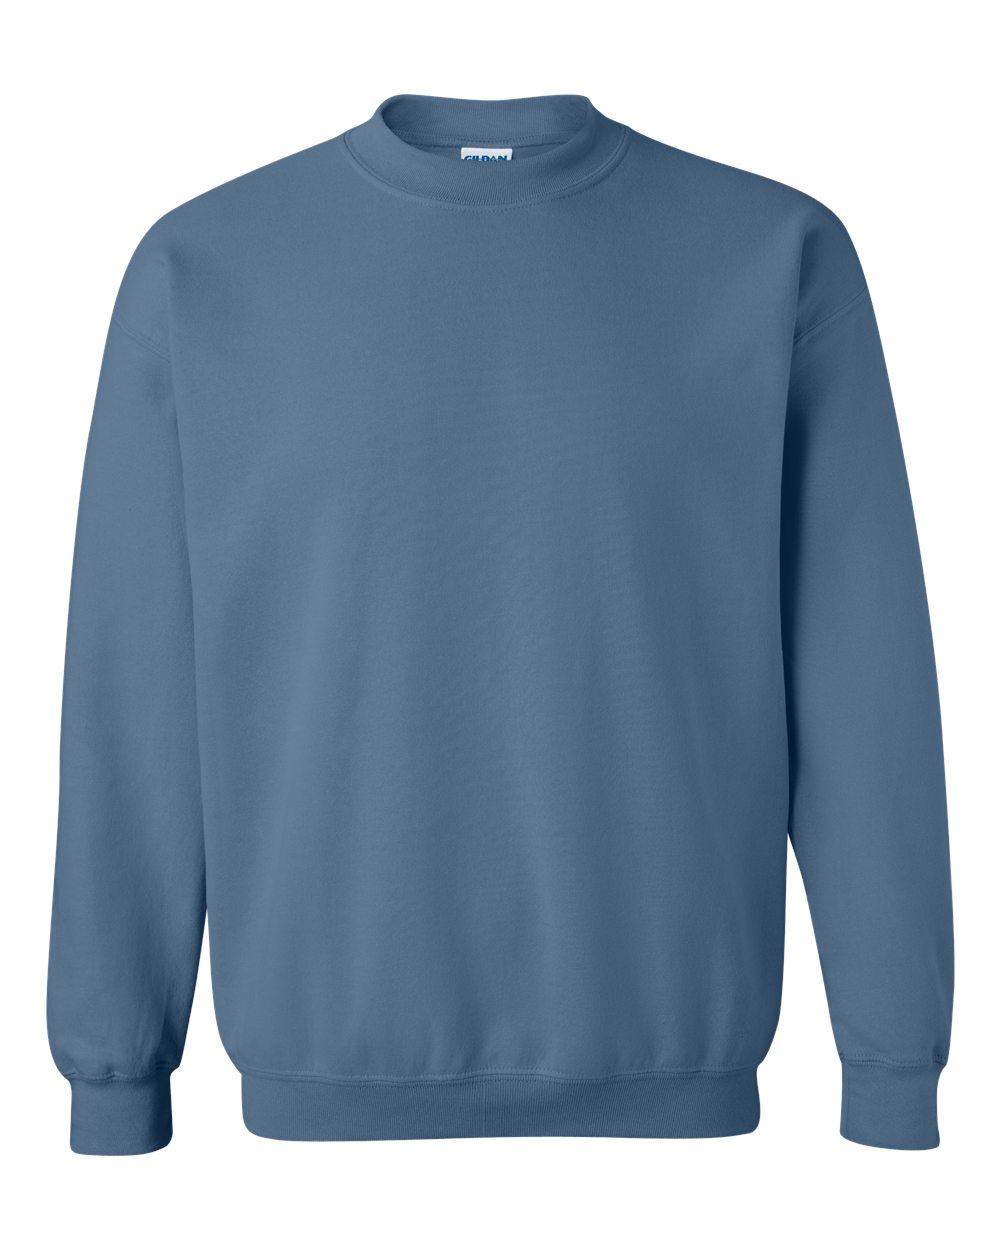 18+ Light Blue Gildan Sweatshirt